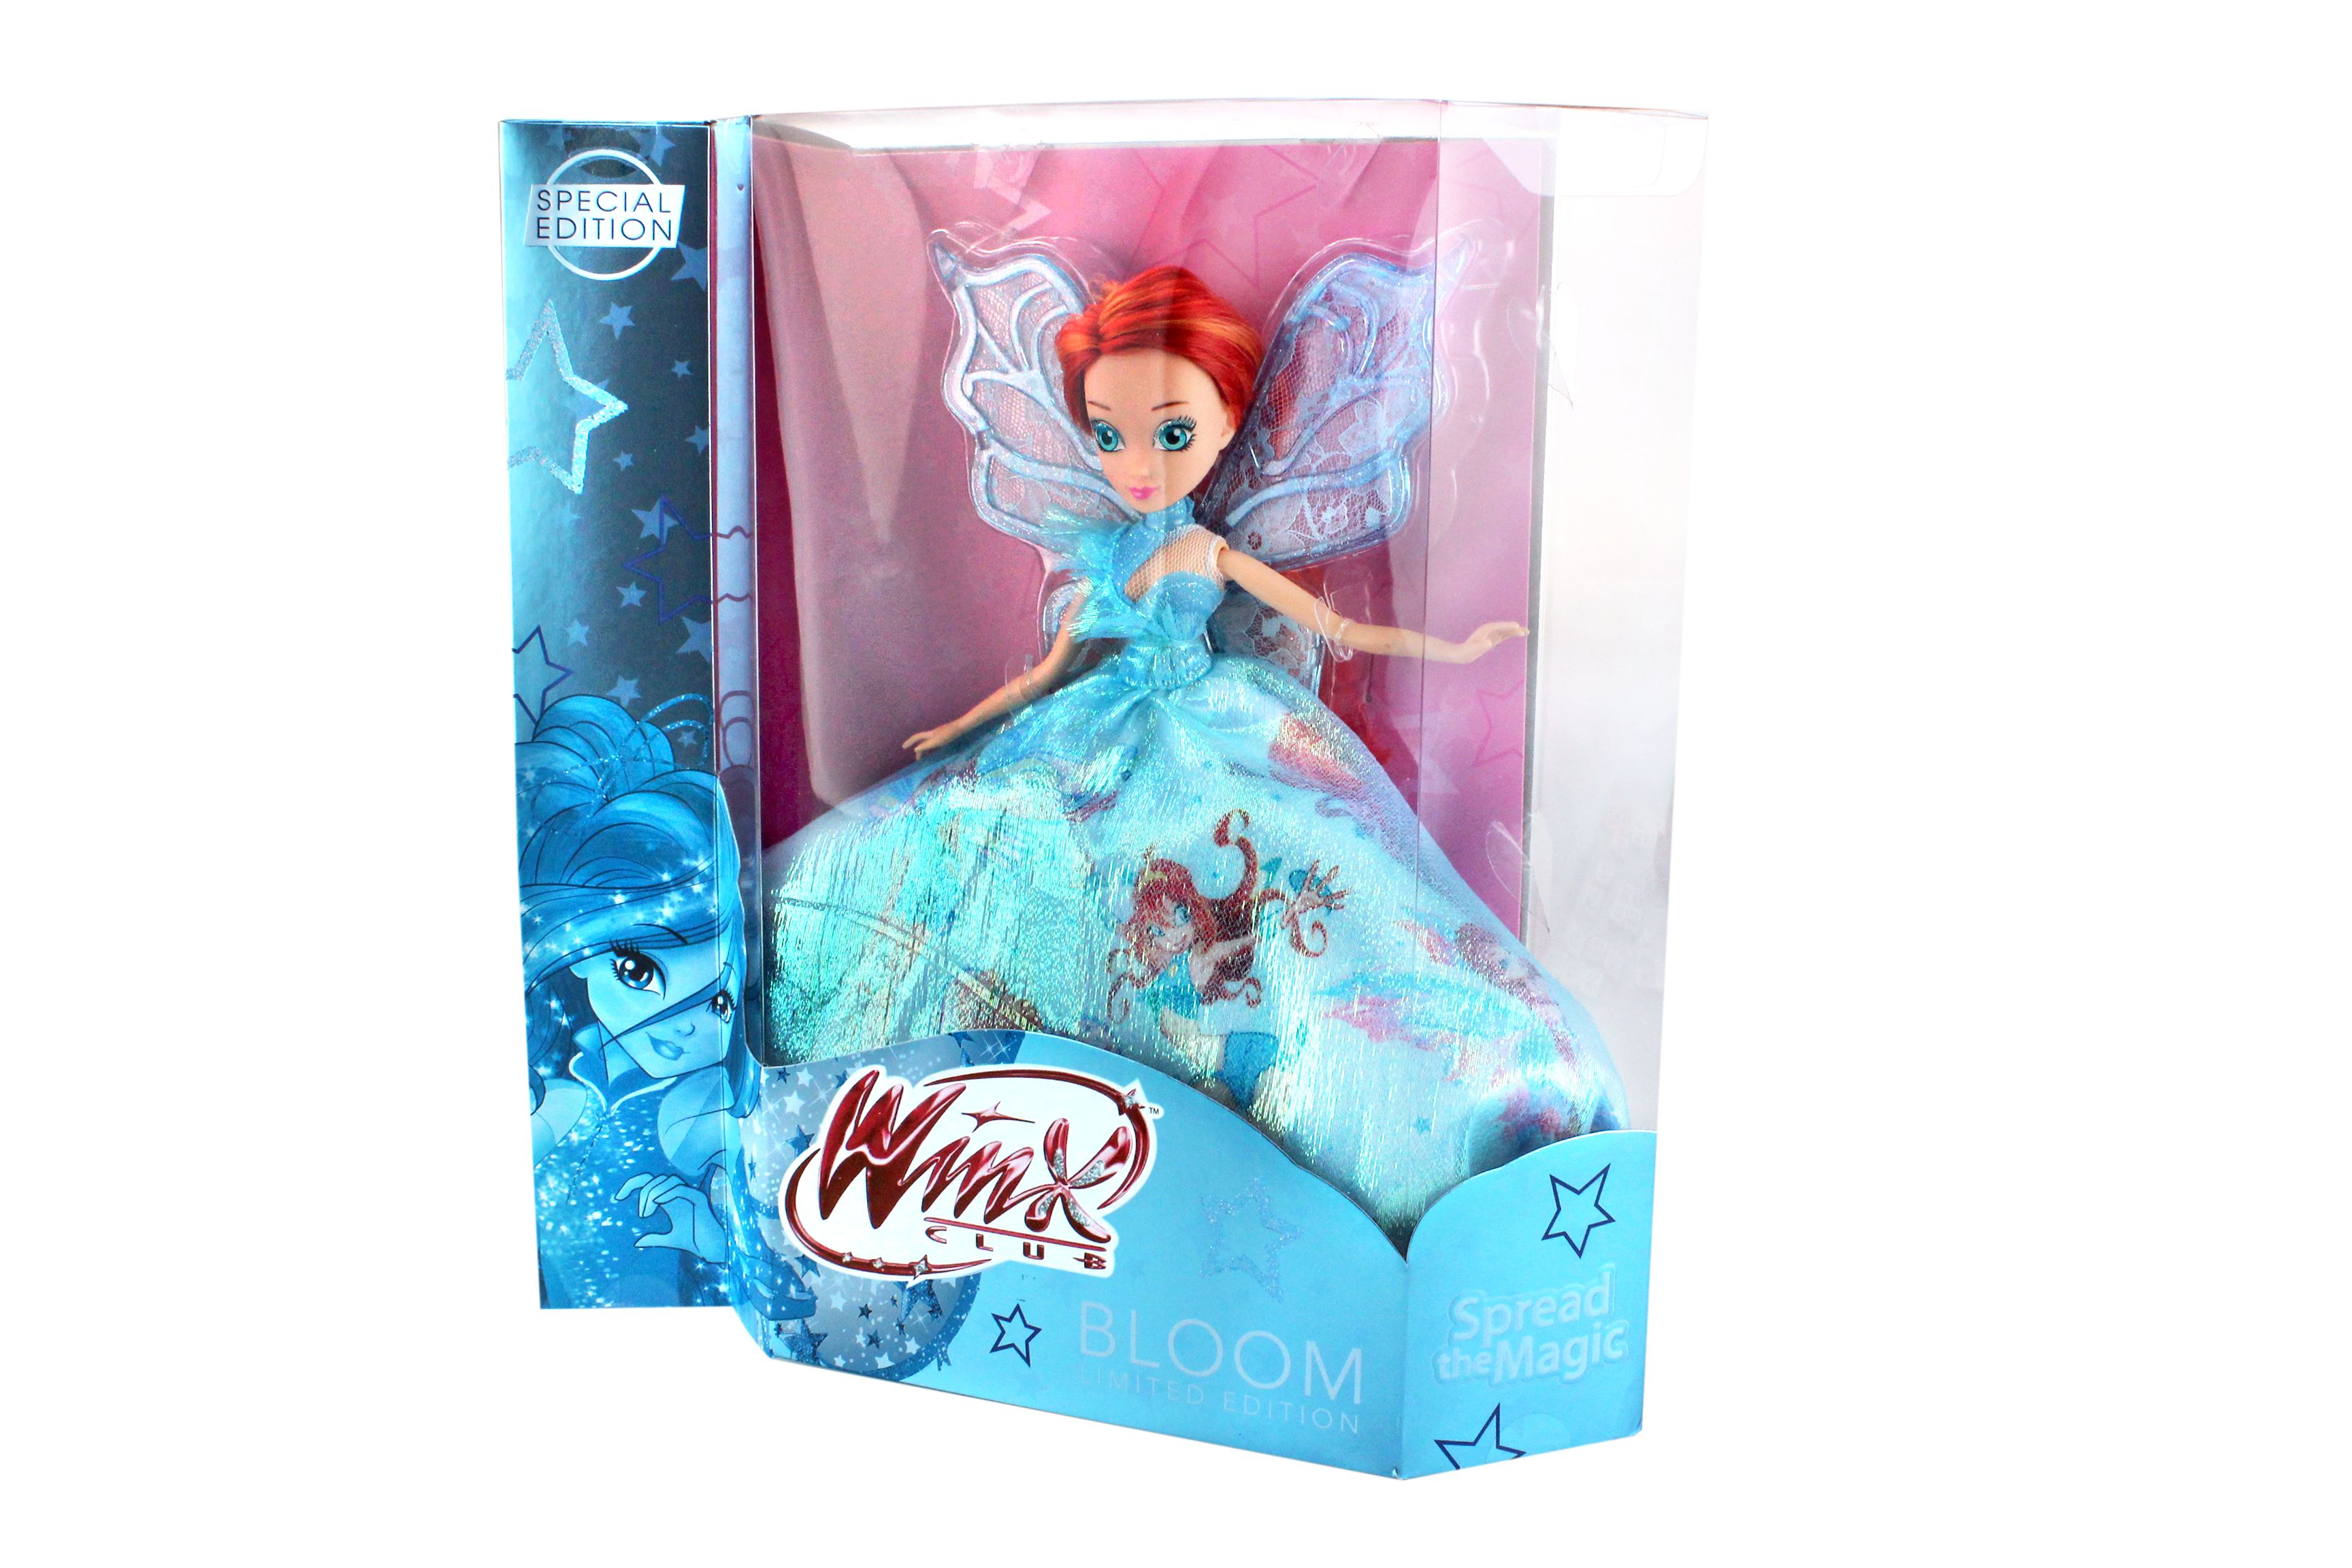 Кукла Winx Club "Блум 2019-limited edition" IW01071900 - фото 5